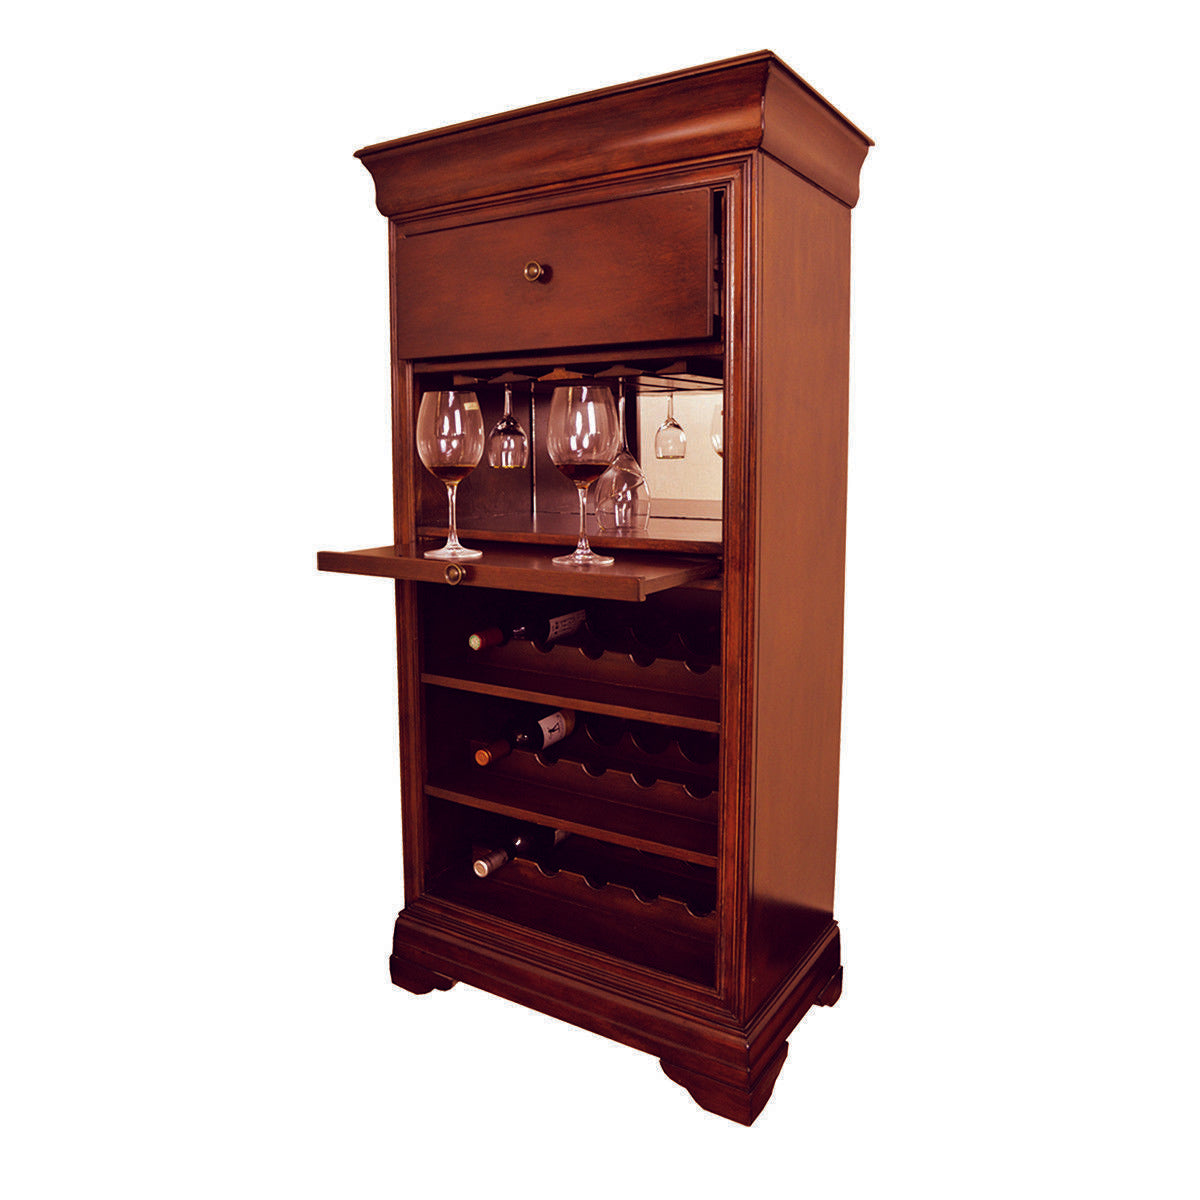 RAM Game Room Bar Cabinet w/ Wine Rack - English Tudor